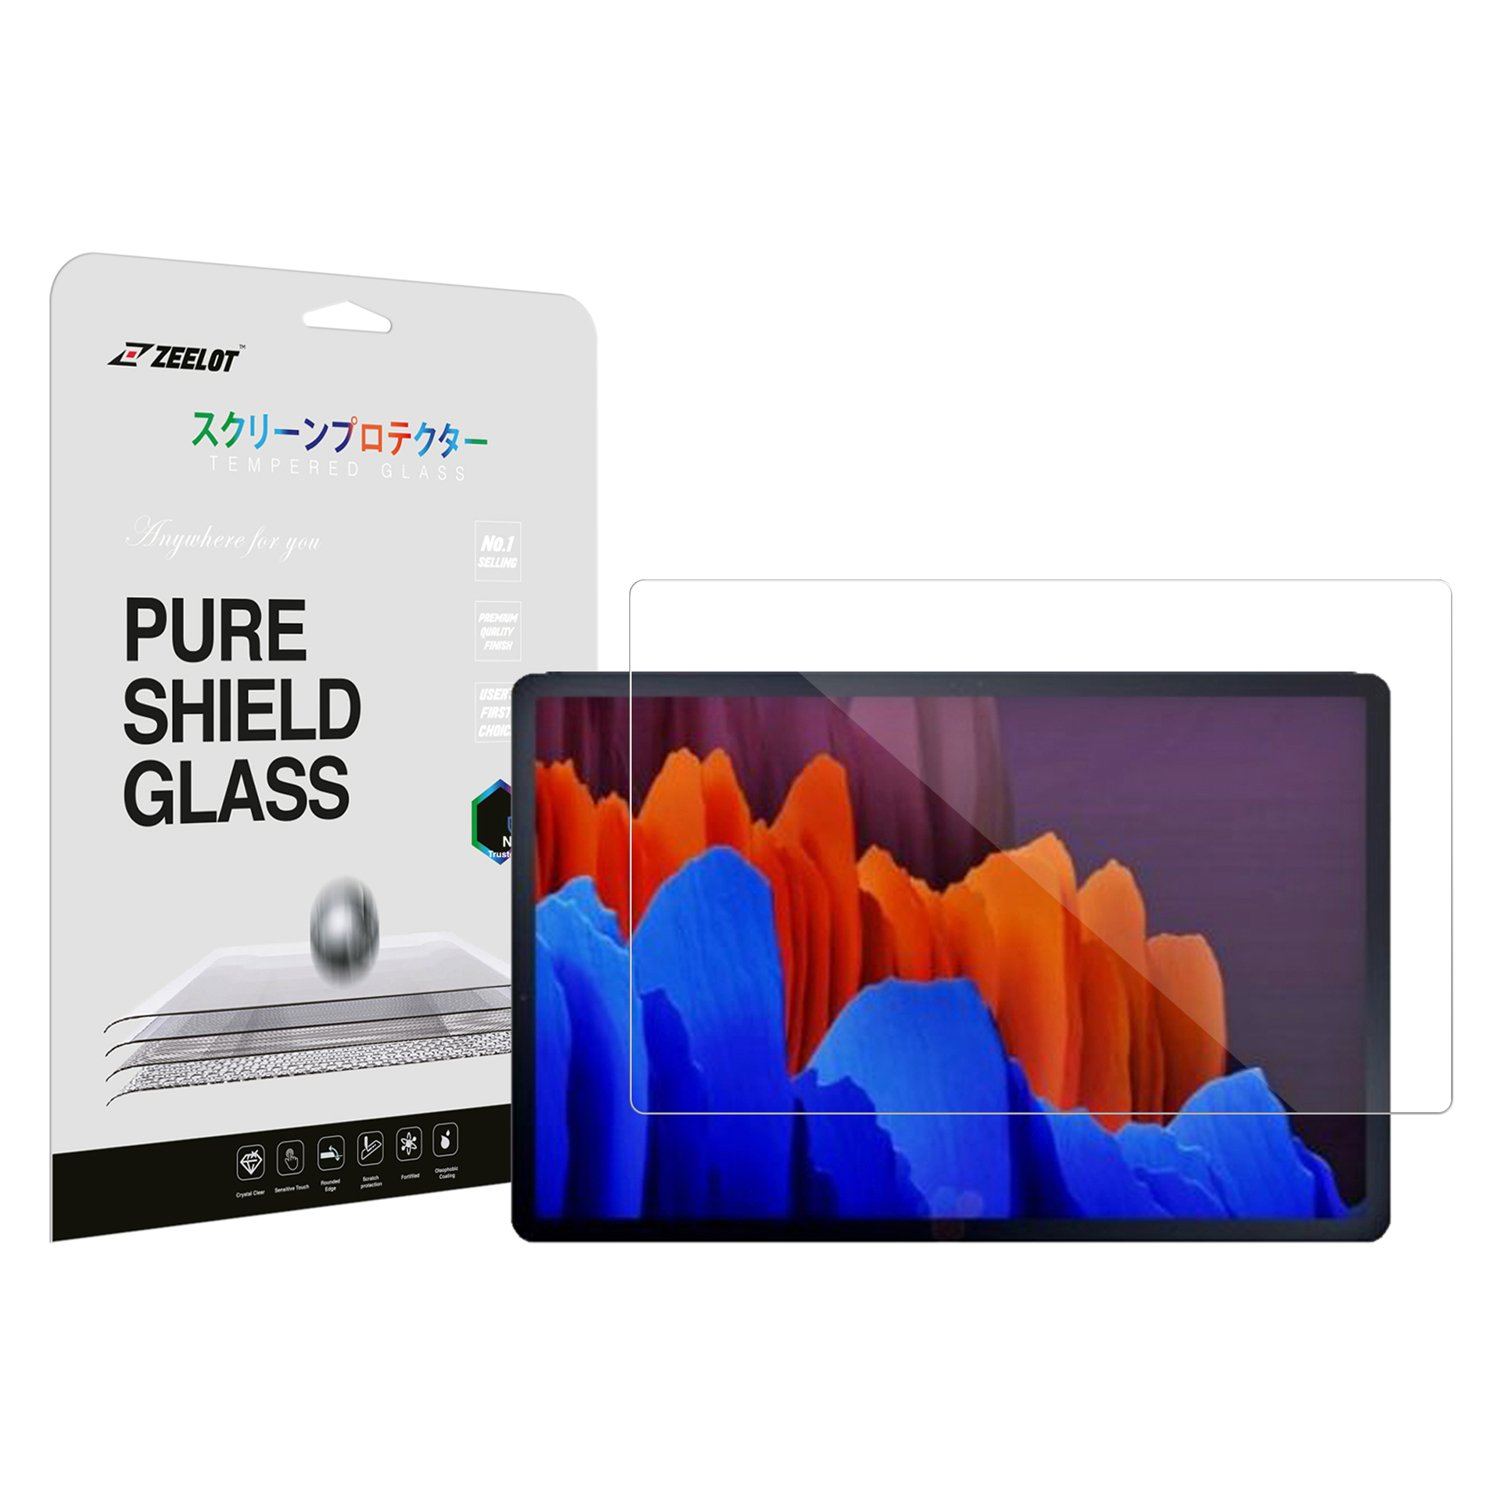 ZEELOT PureShield 2.5D Tempered Glass Screen Protector for Samsung Galaxy Tab S7+ (2020), Clear Default ZEELOT 